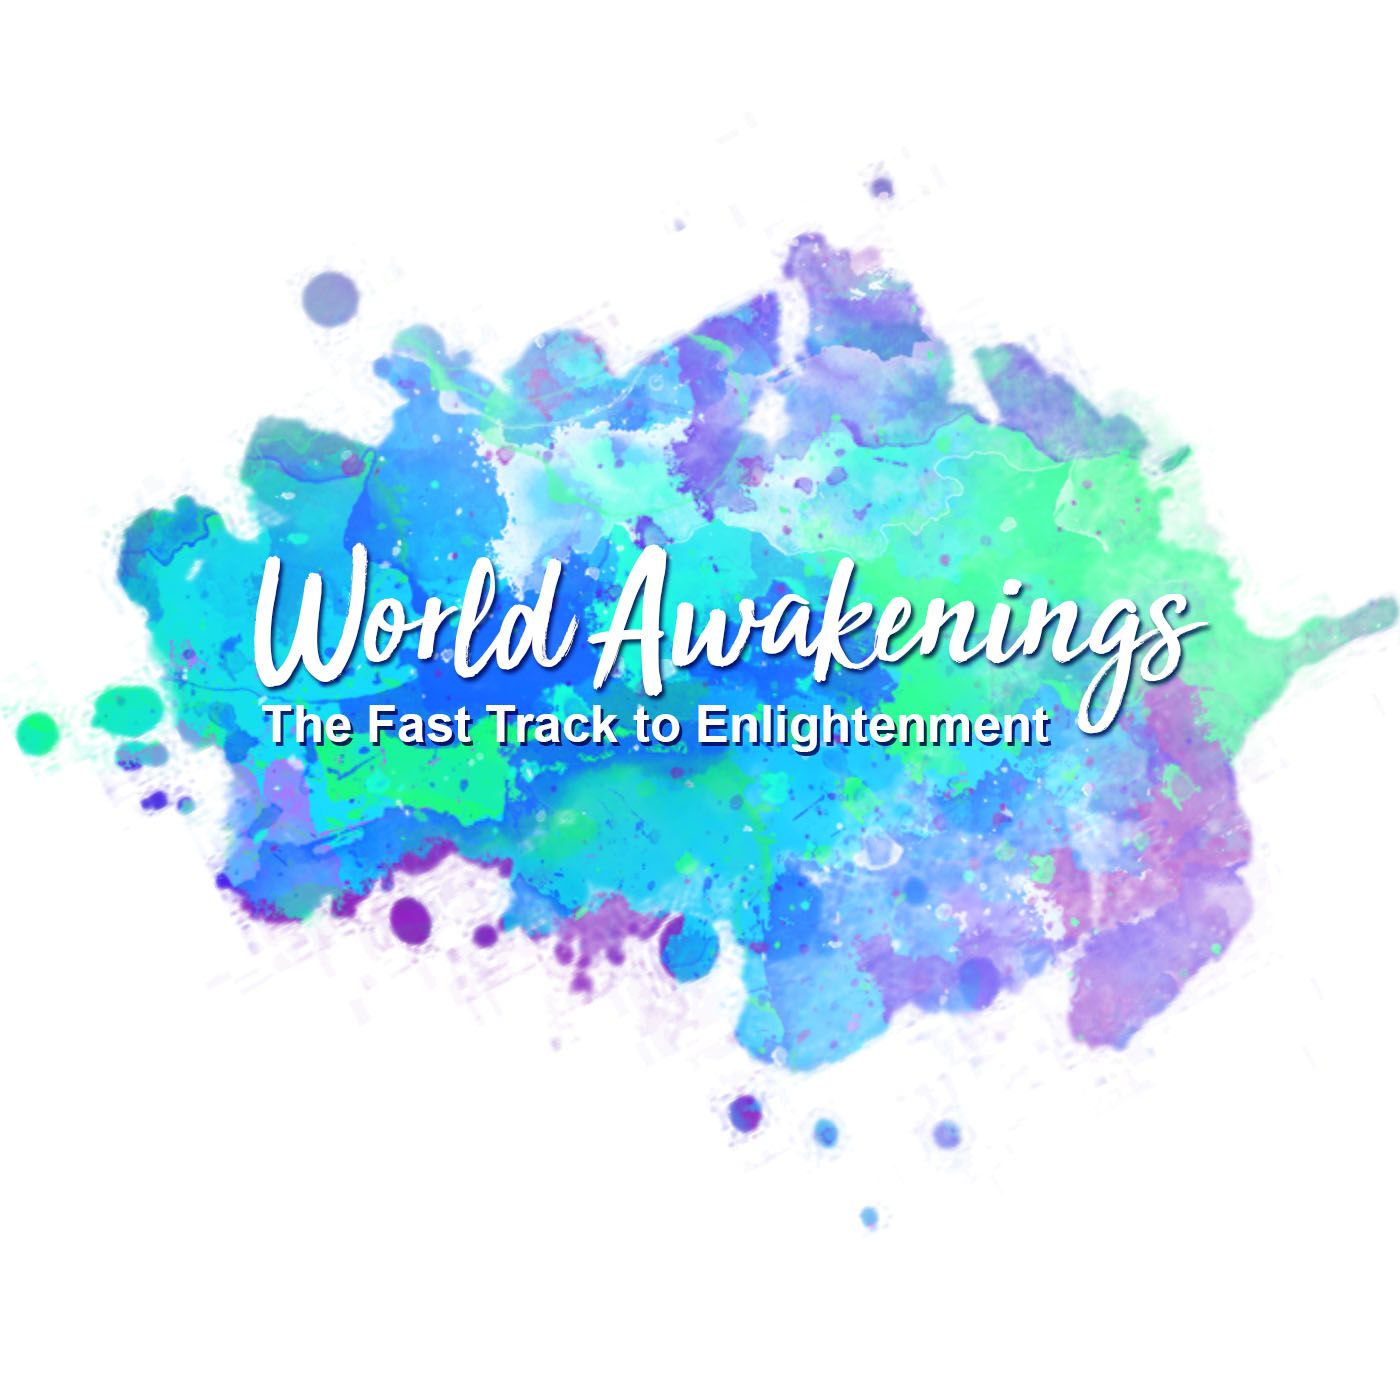 World Awakenings: The Fast Track to Enlightenment